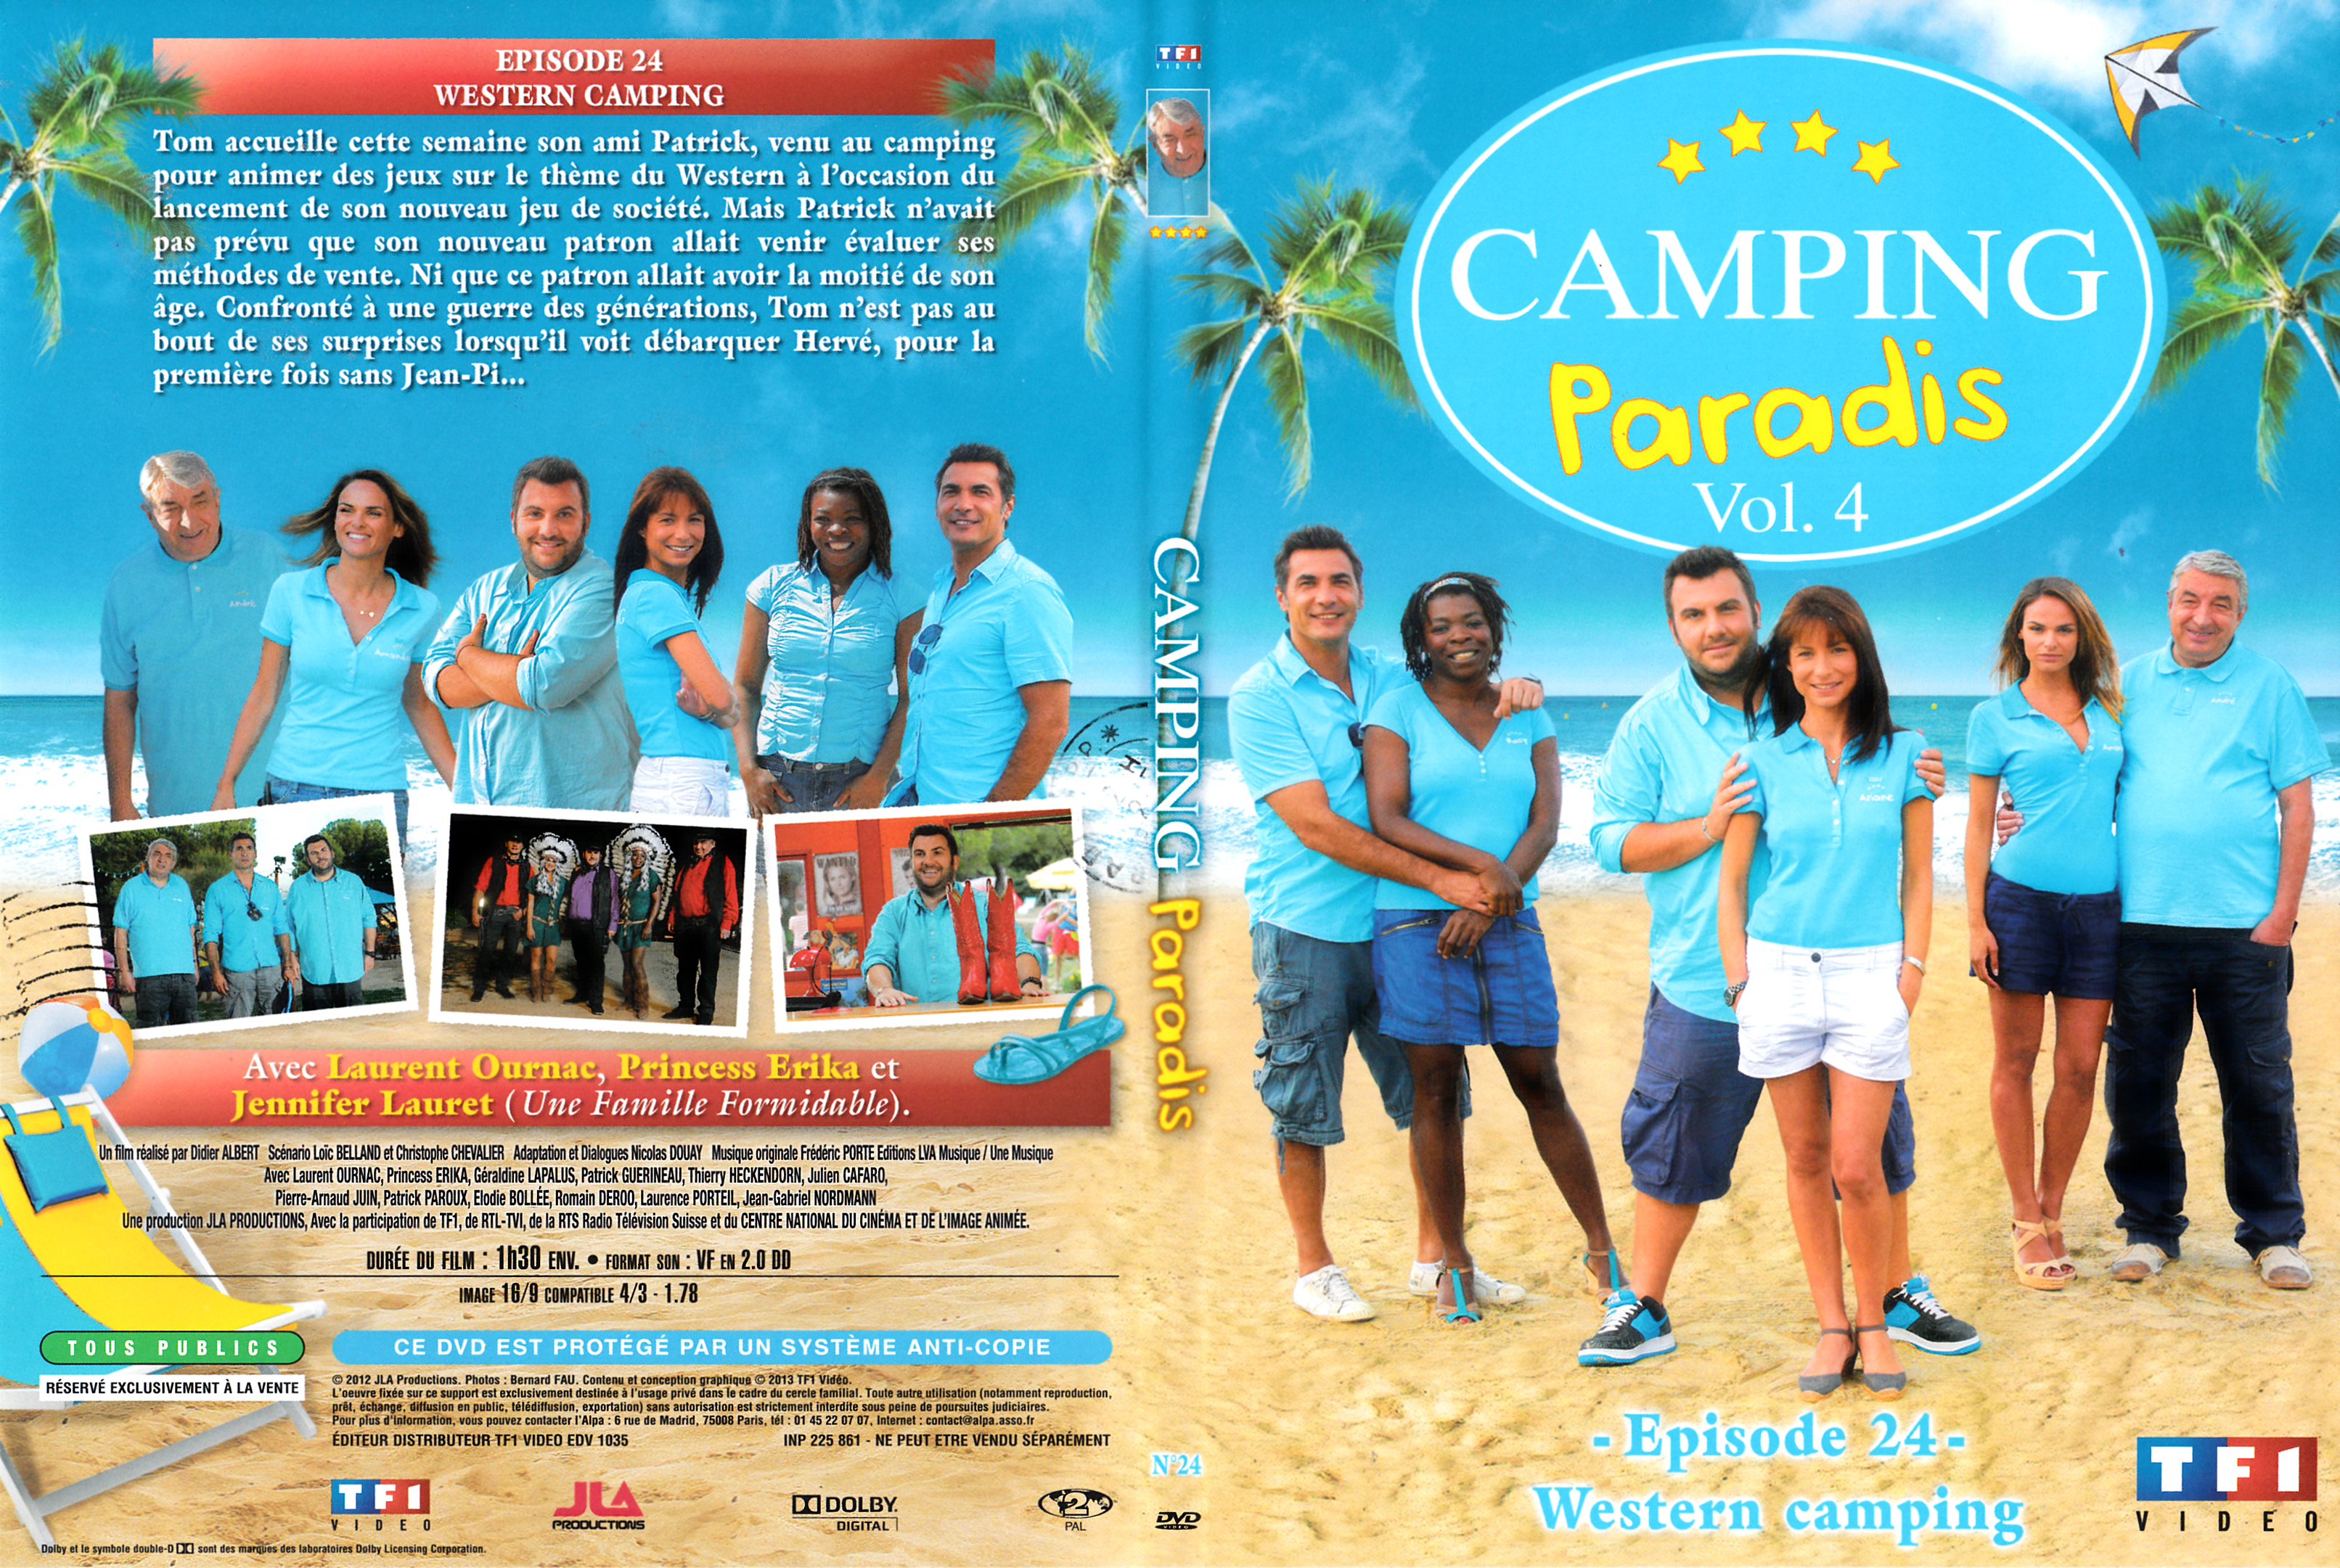 Jaquette DVD Camping Paradis vol 24